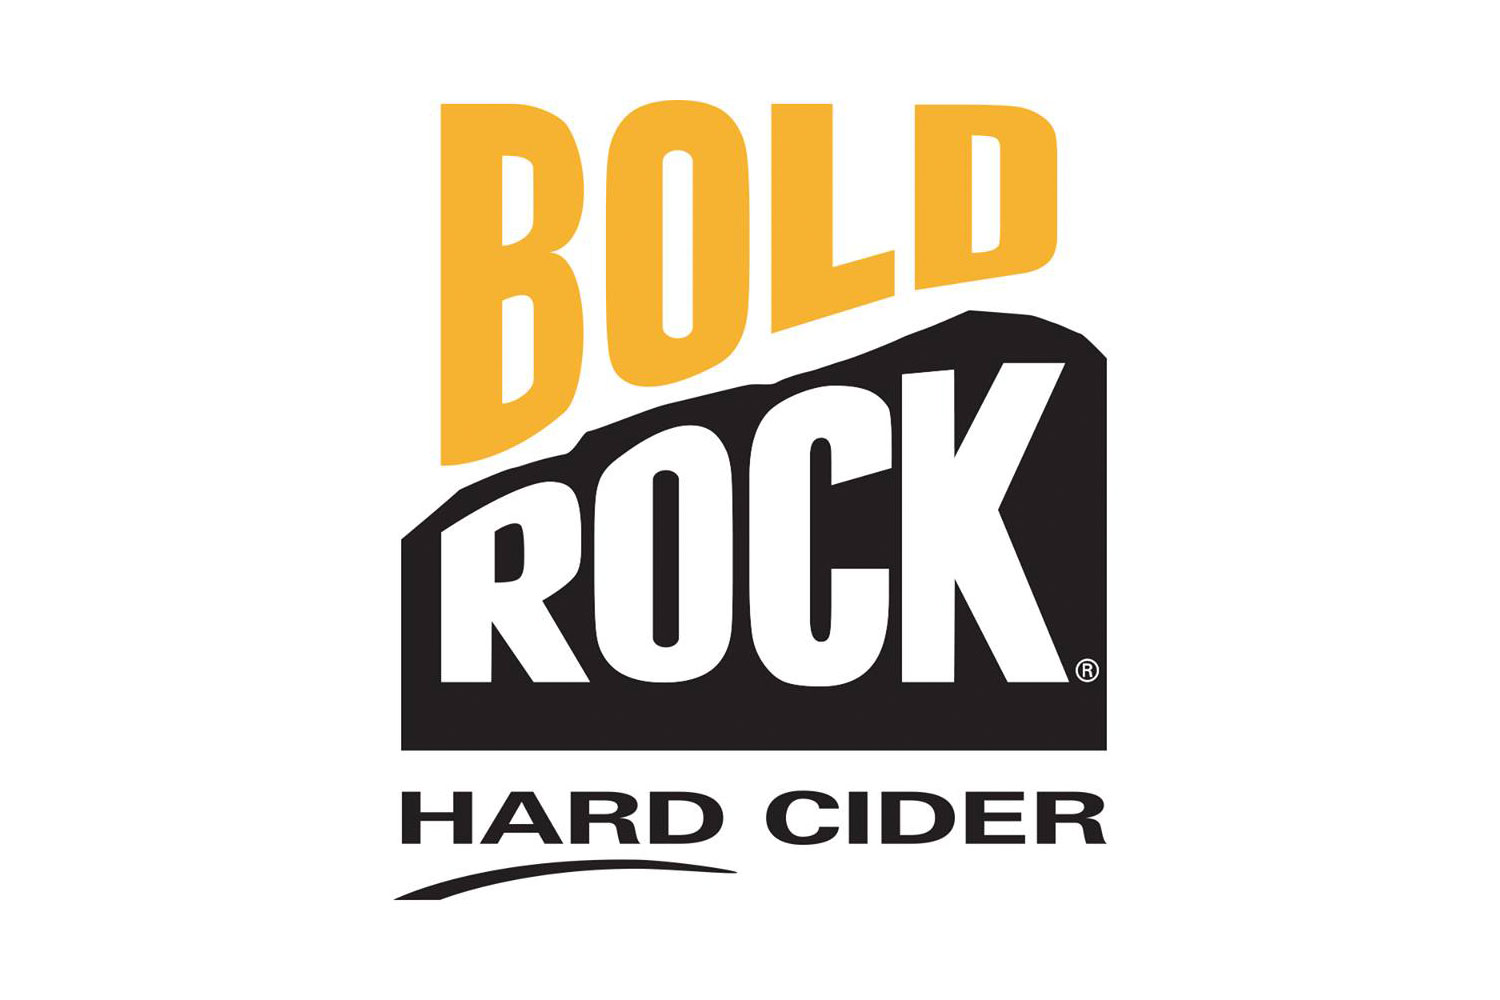 Bold Rock Cidery